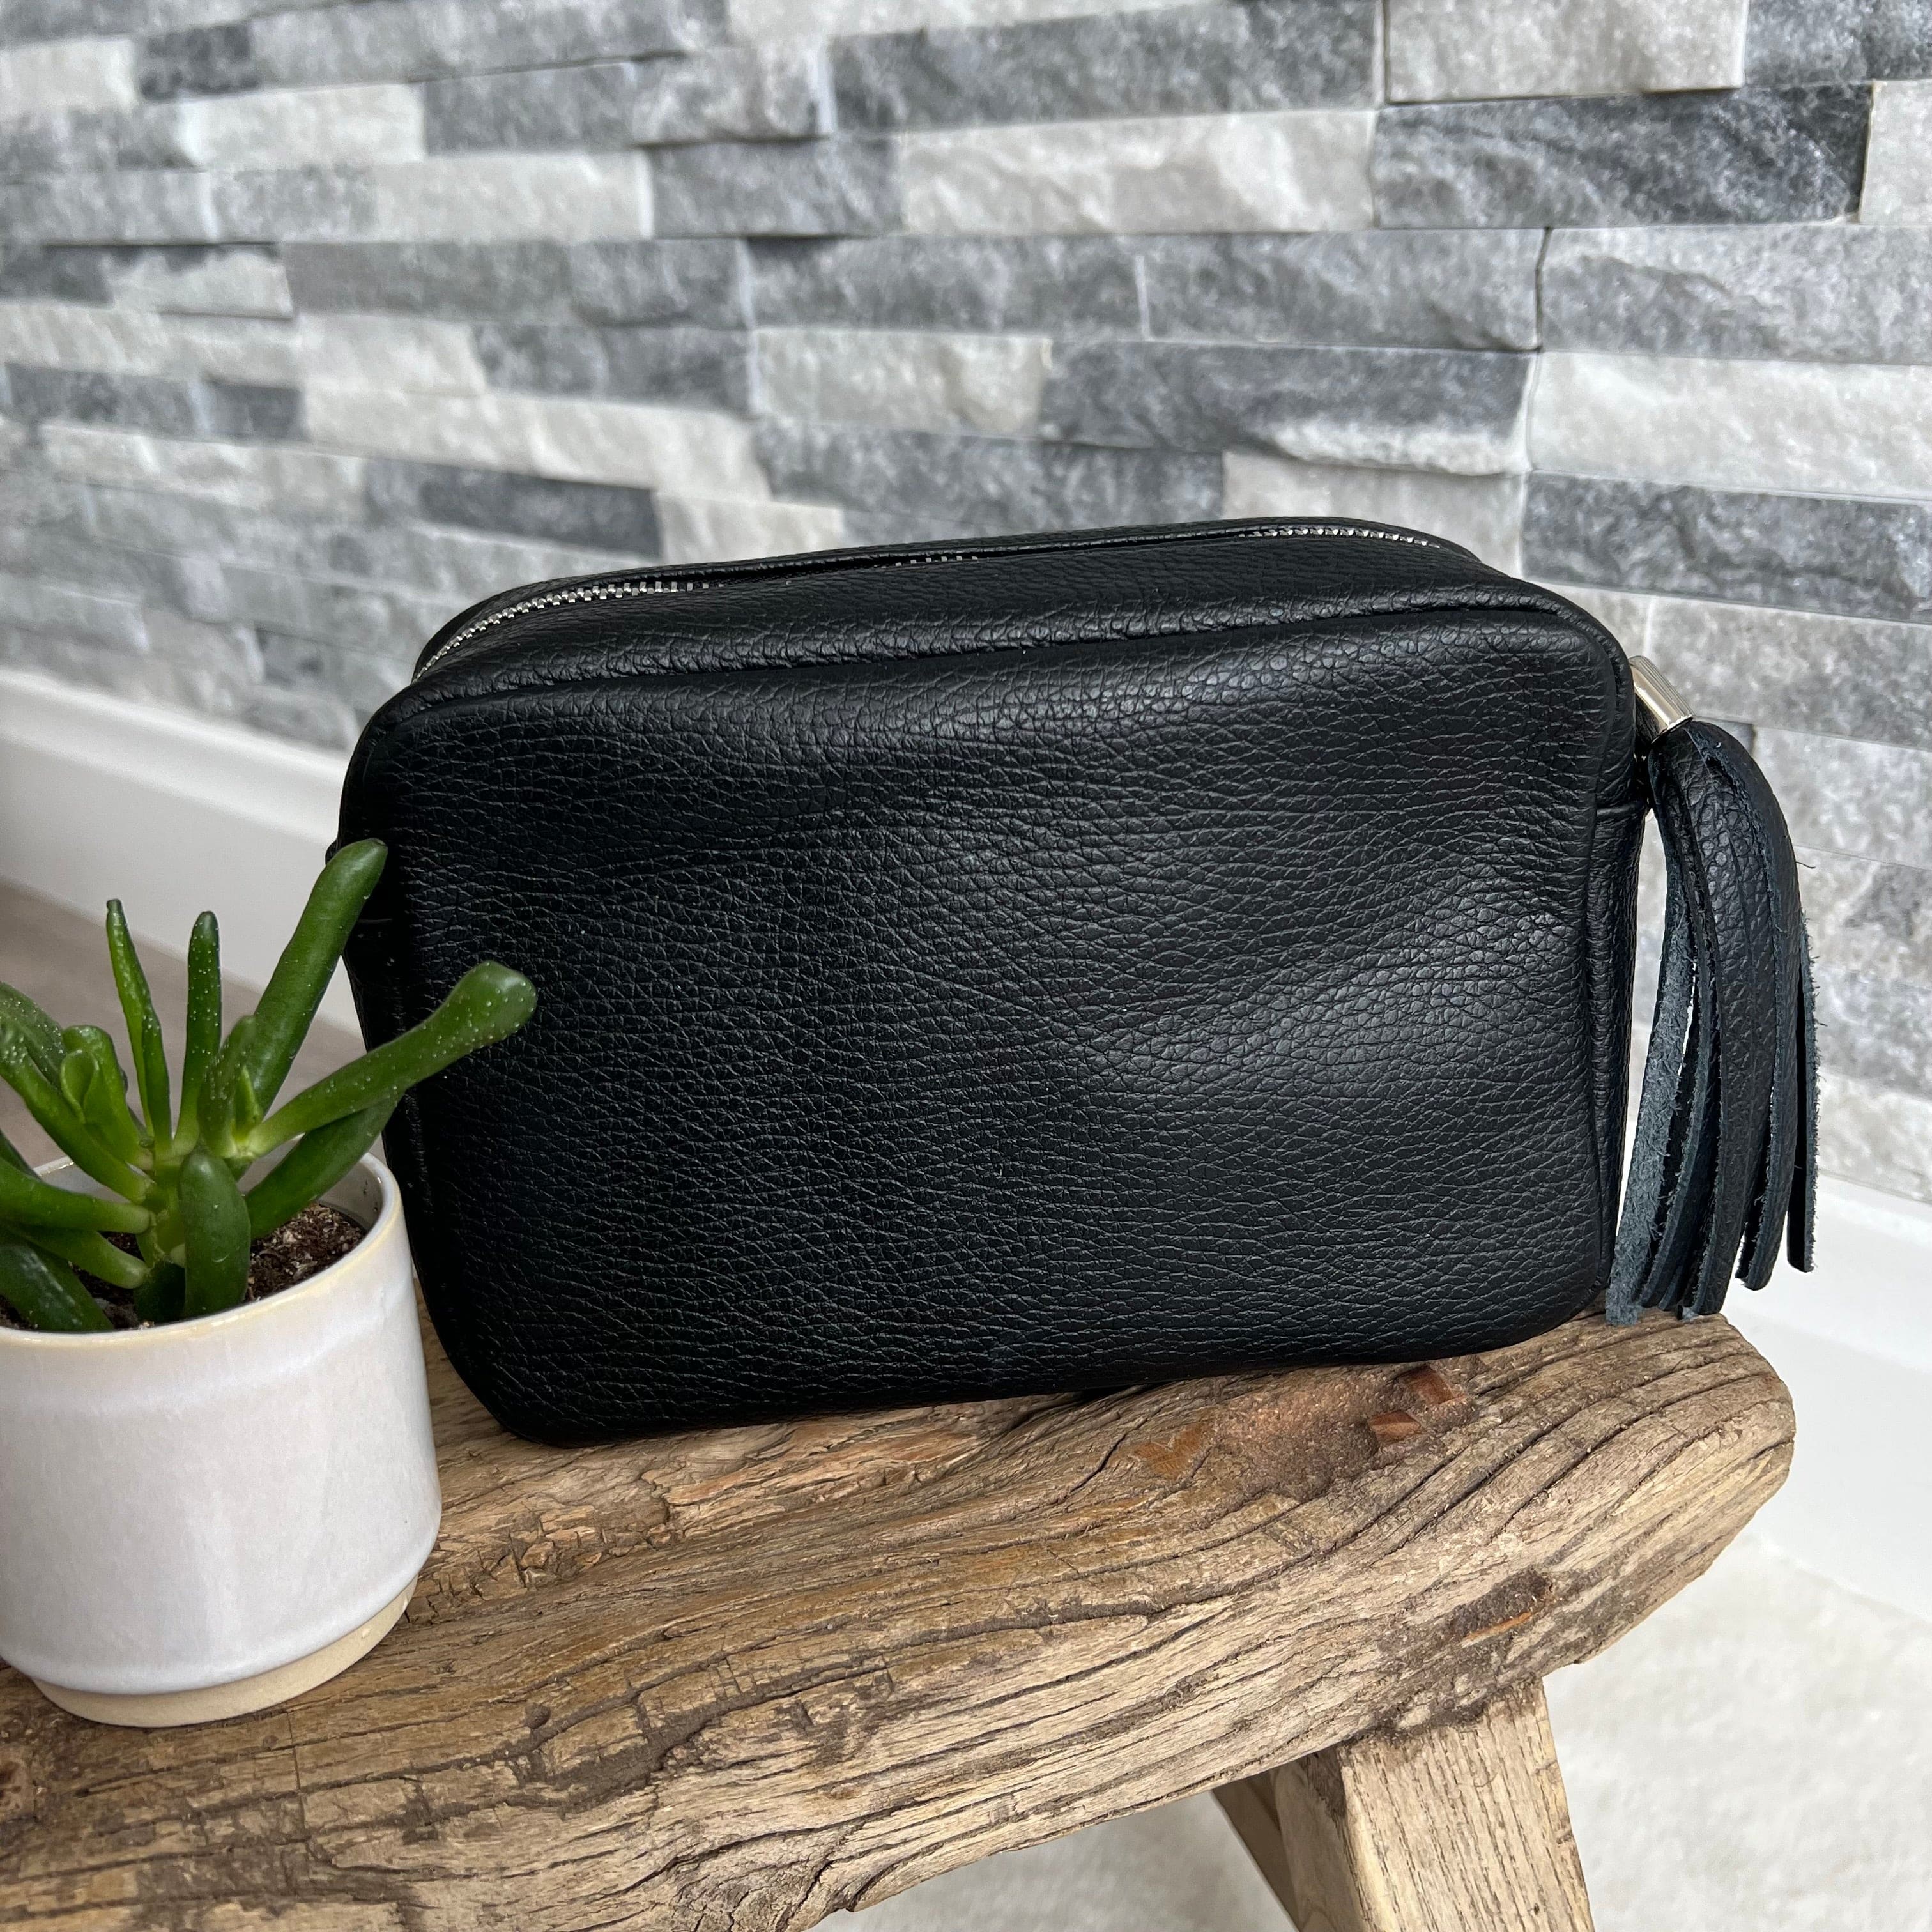 lusciousscarves Handbags Black Italian Leather Soft Crossbody Camera Bag